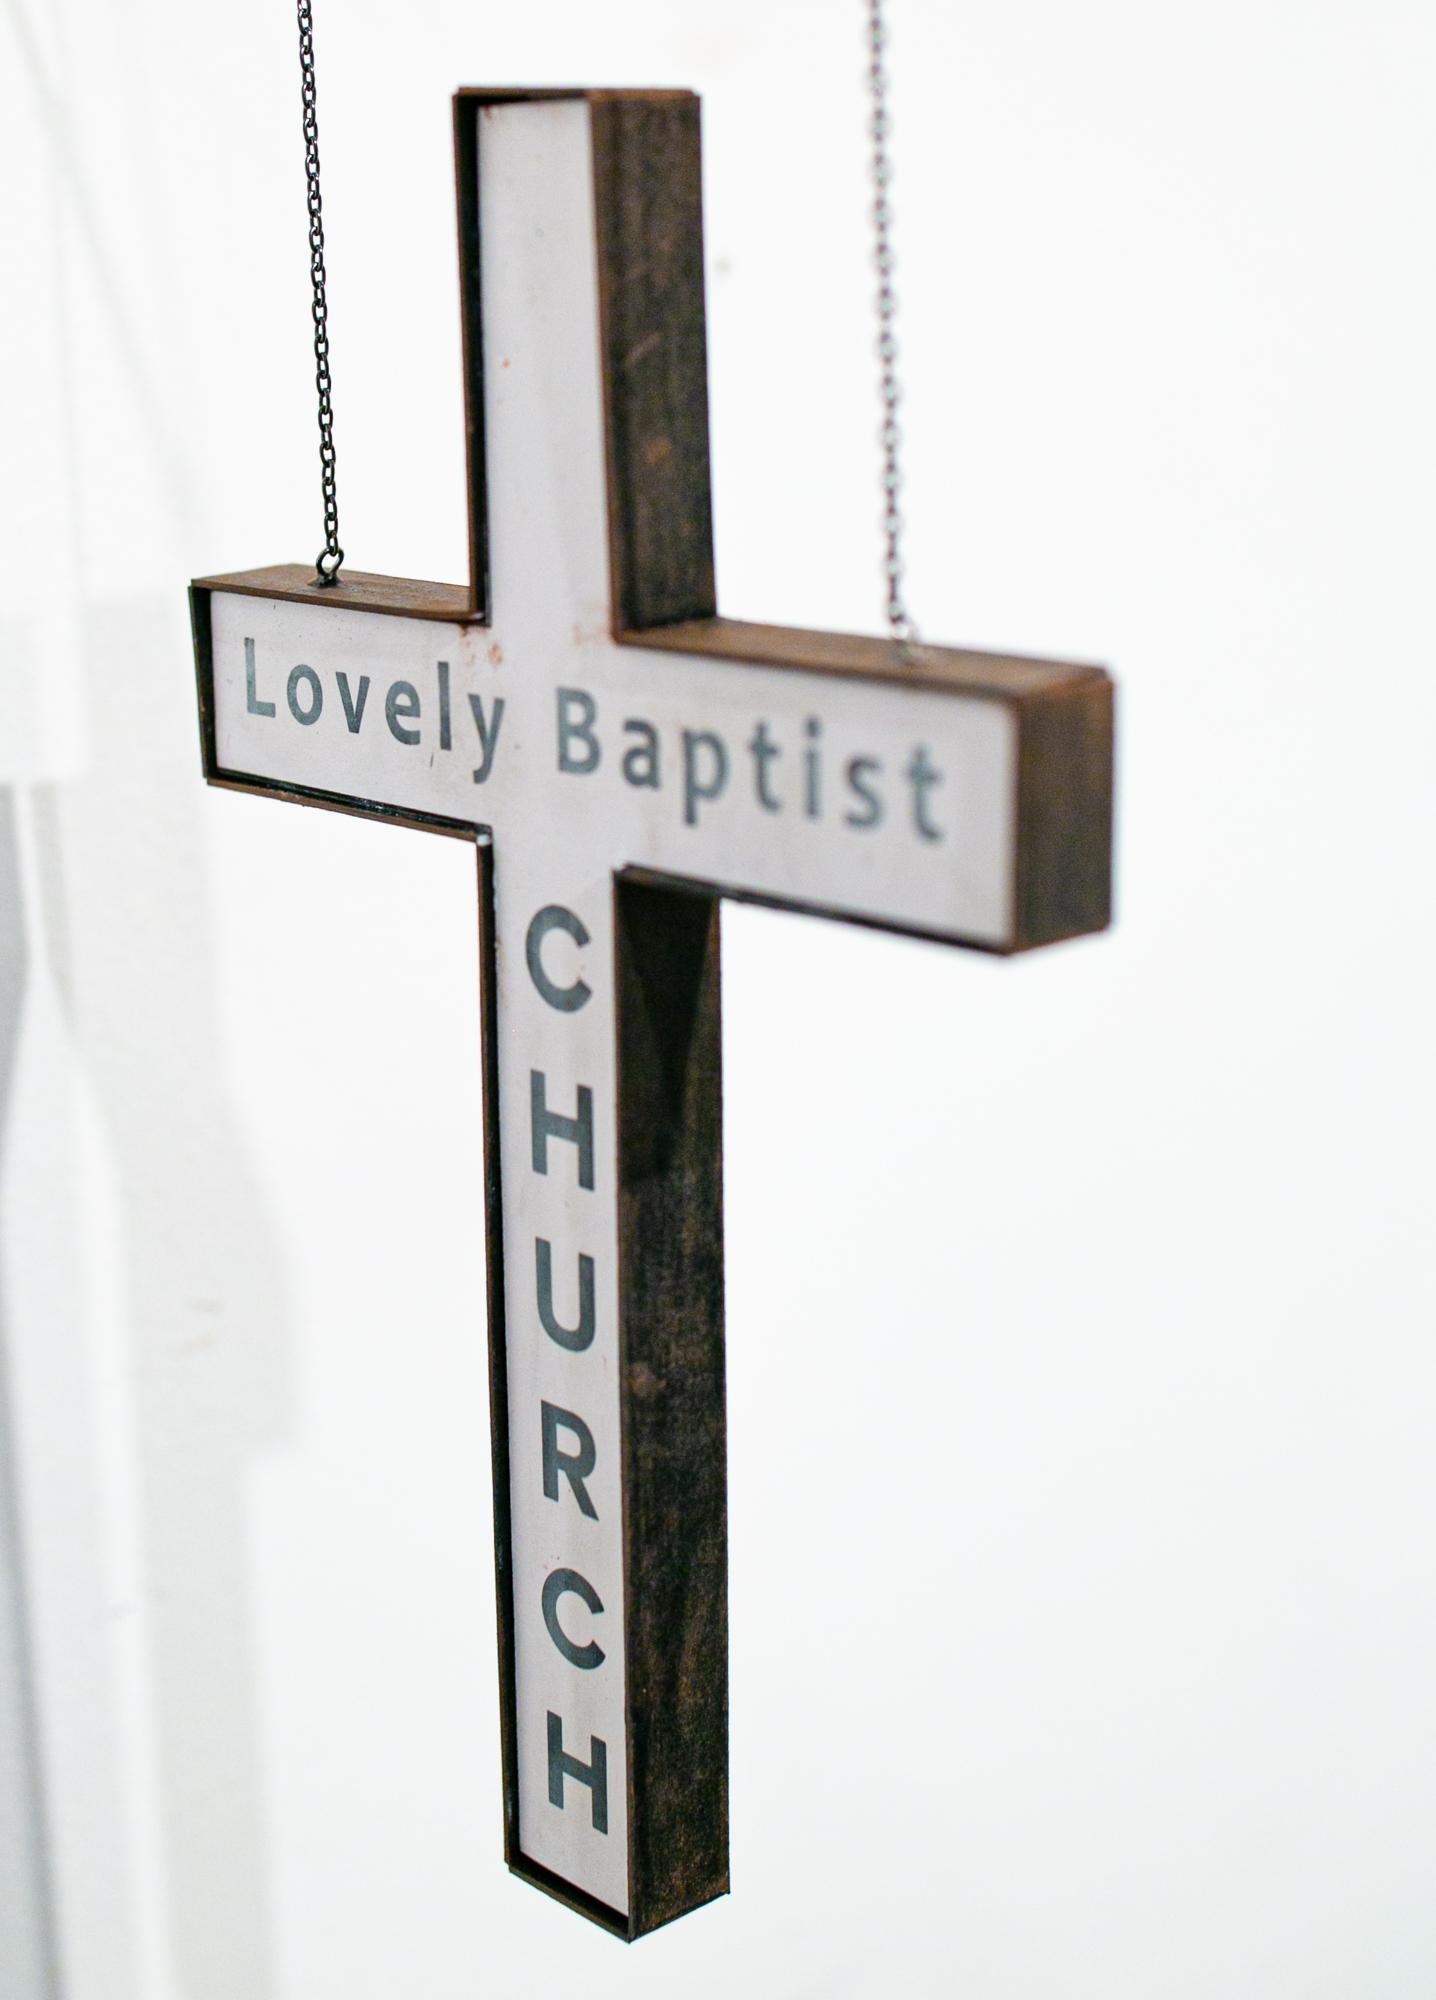 Lovely Baptist Church - Contemporary Art by Drew Leshko